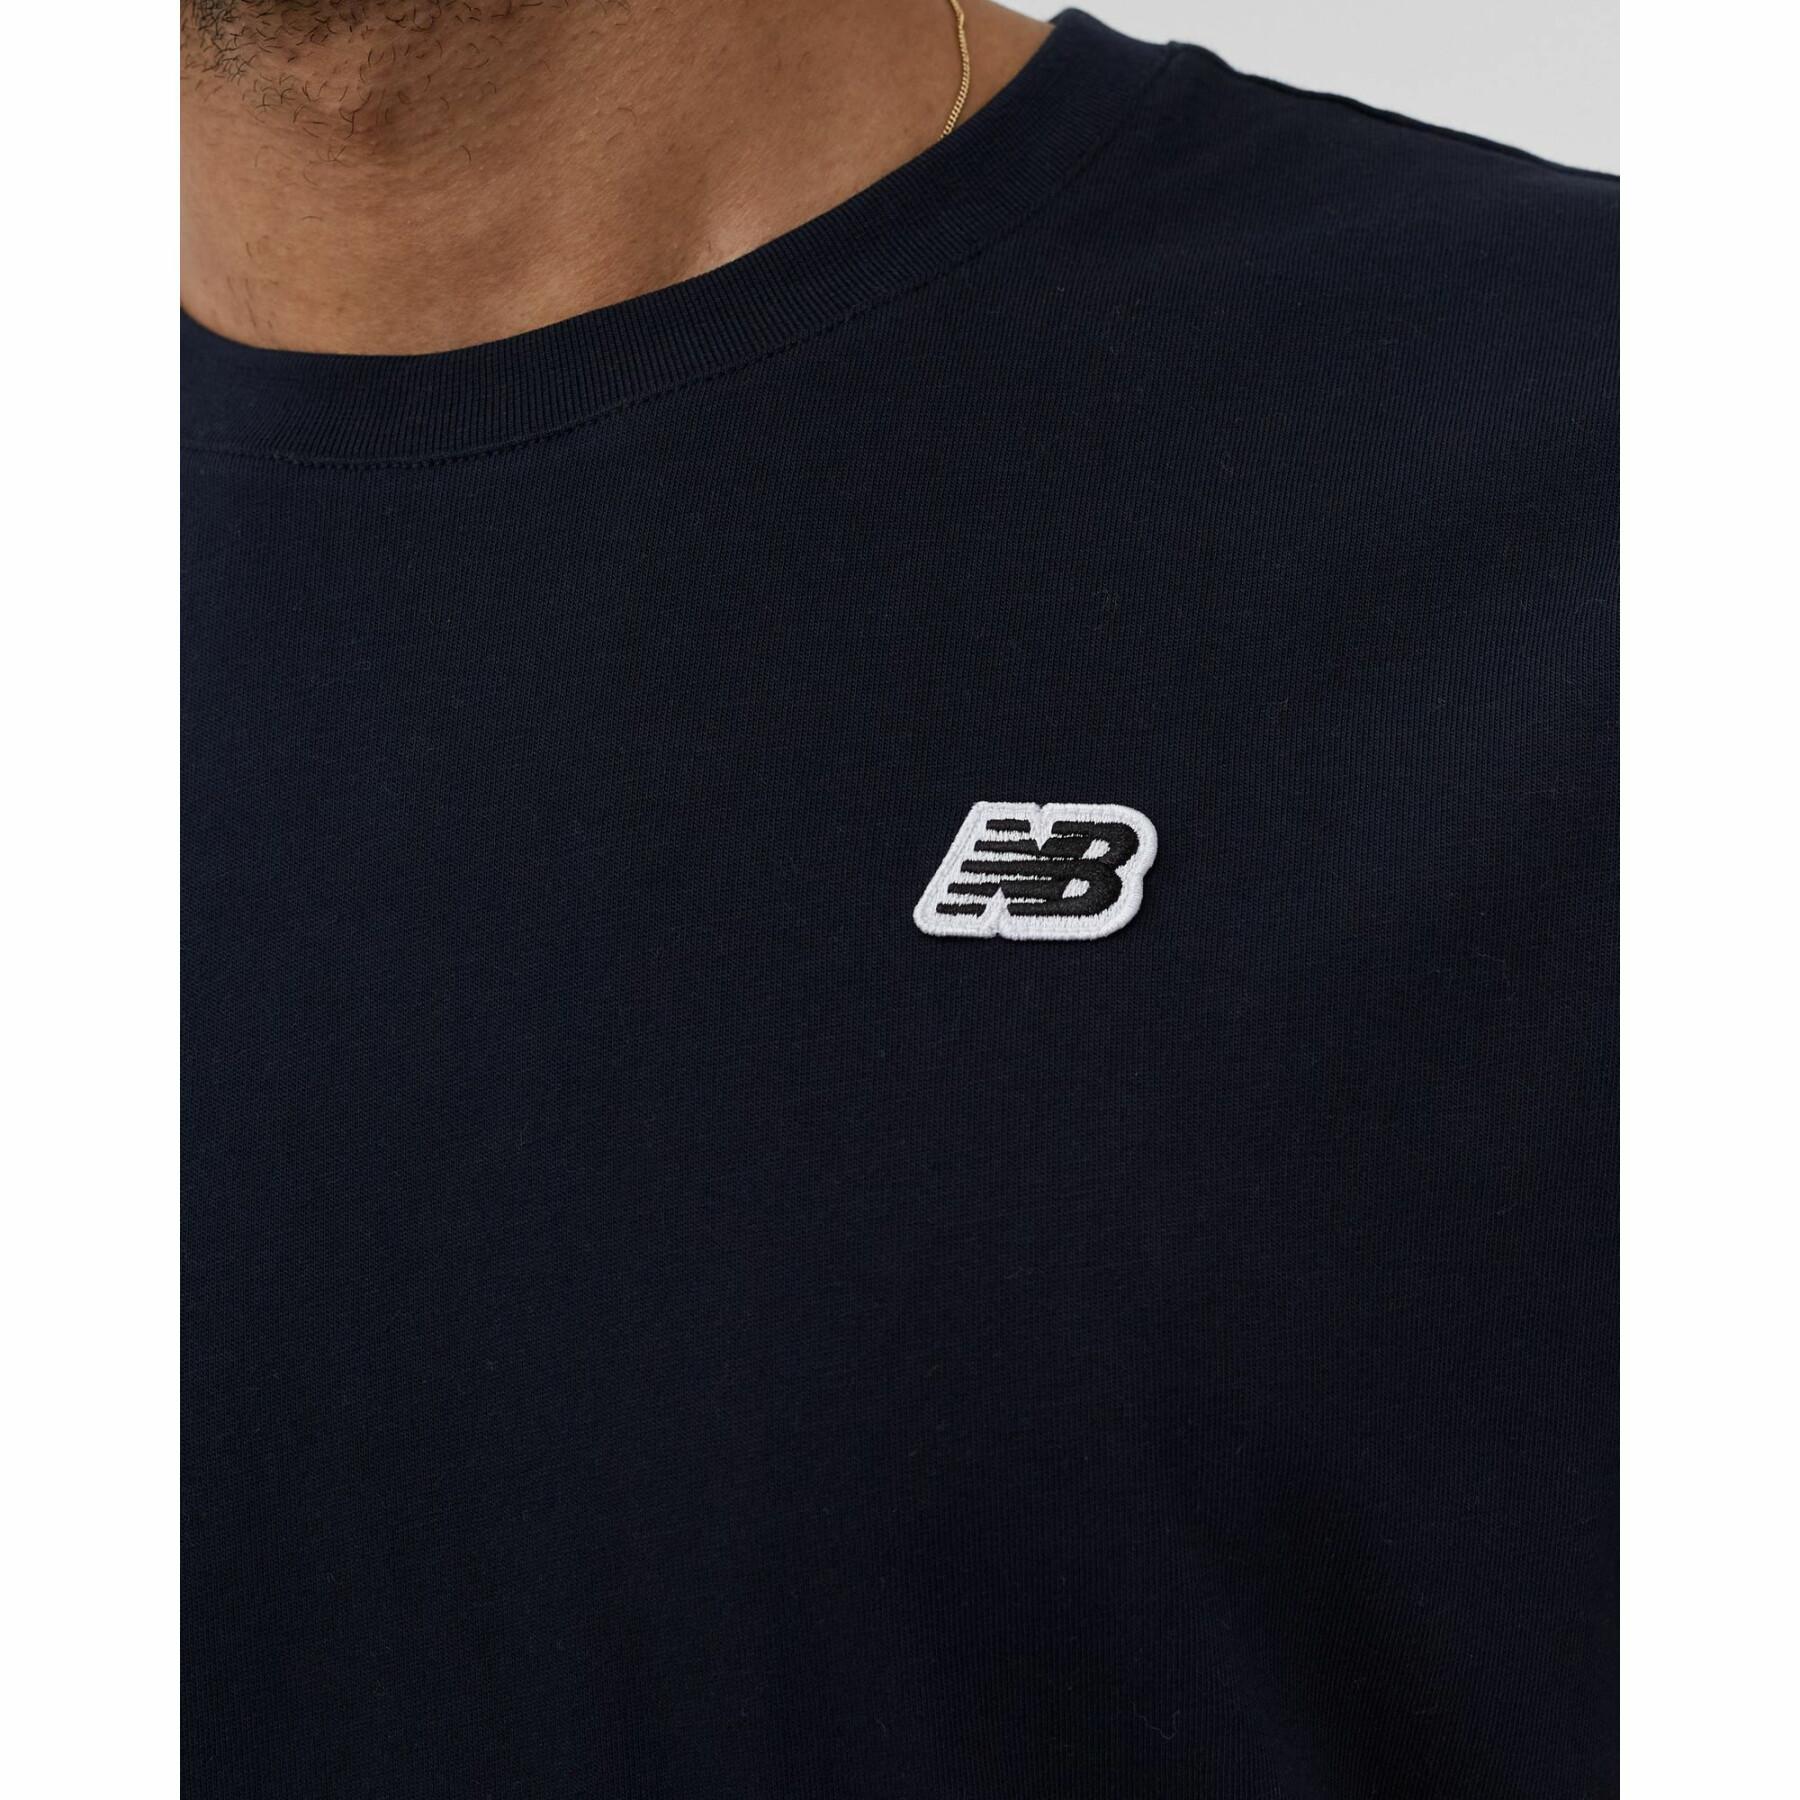 Maglietta New Balance Logo